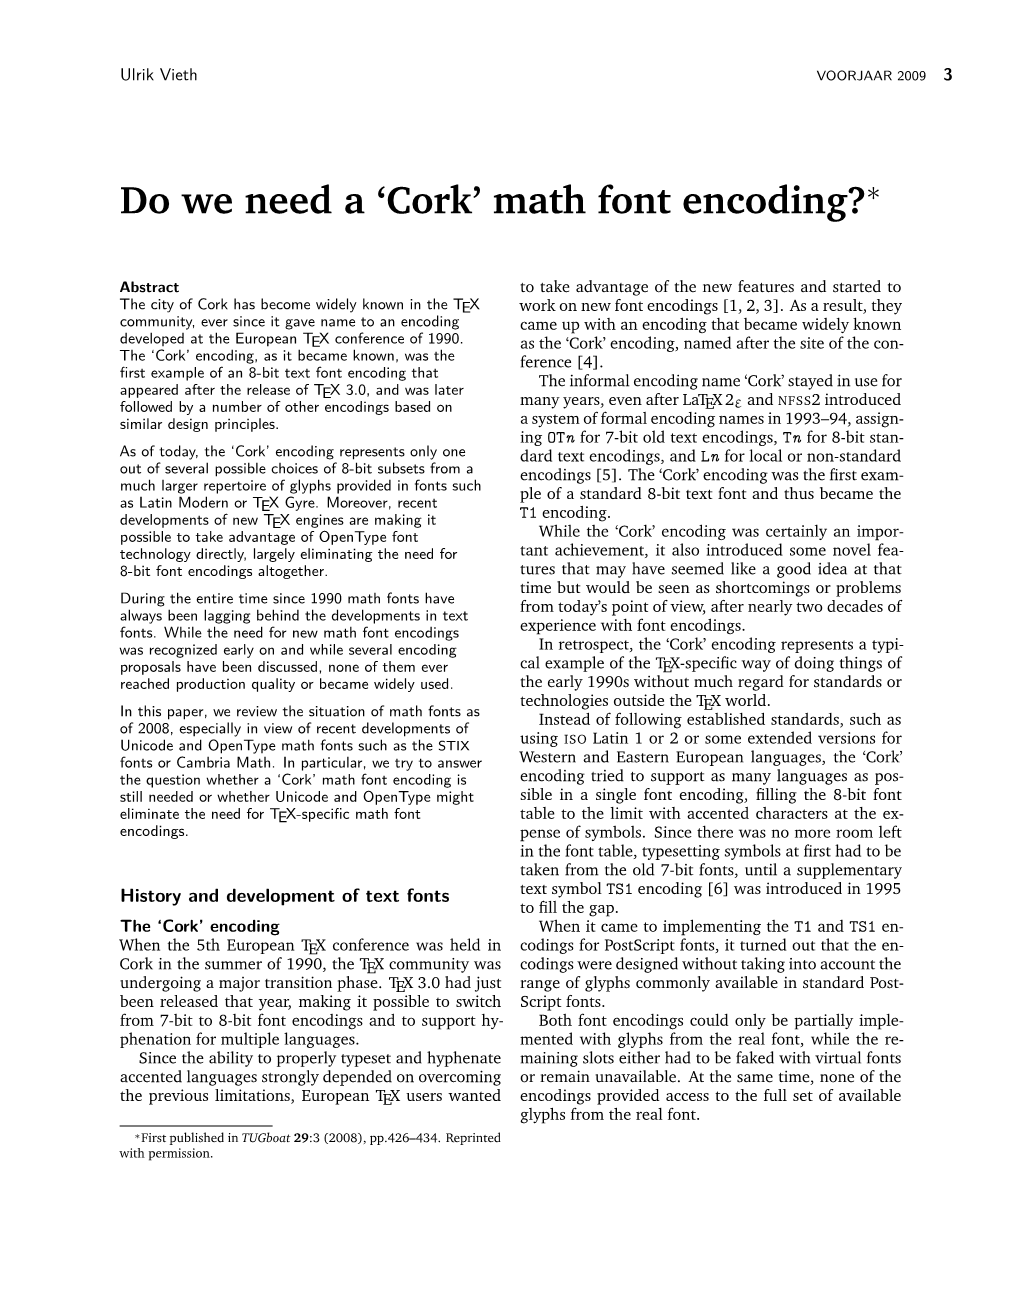 Do We Need a 'Cork' Math Font Encoding?